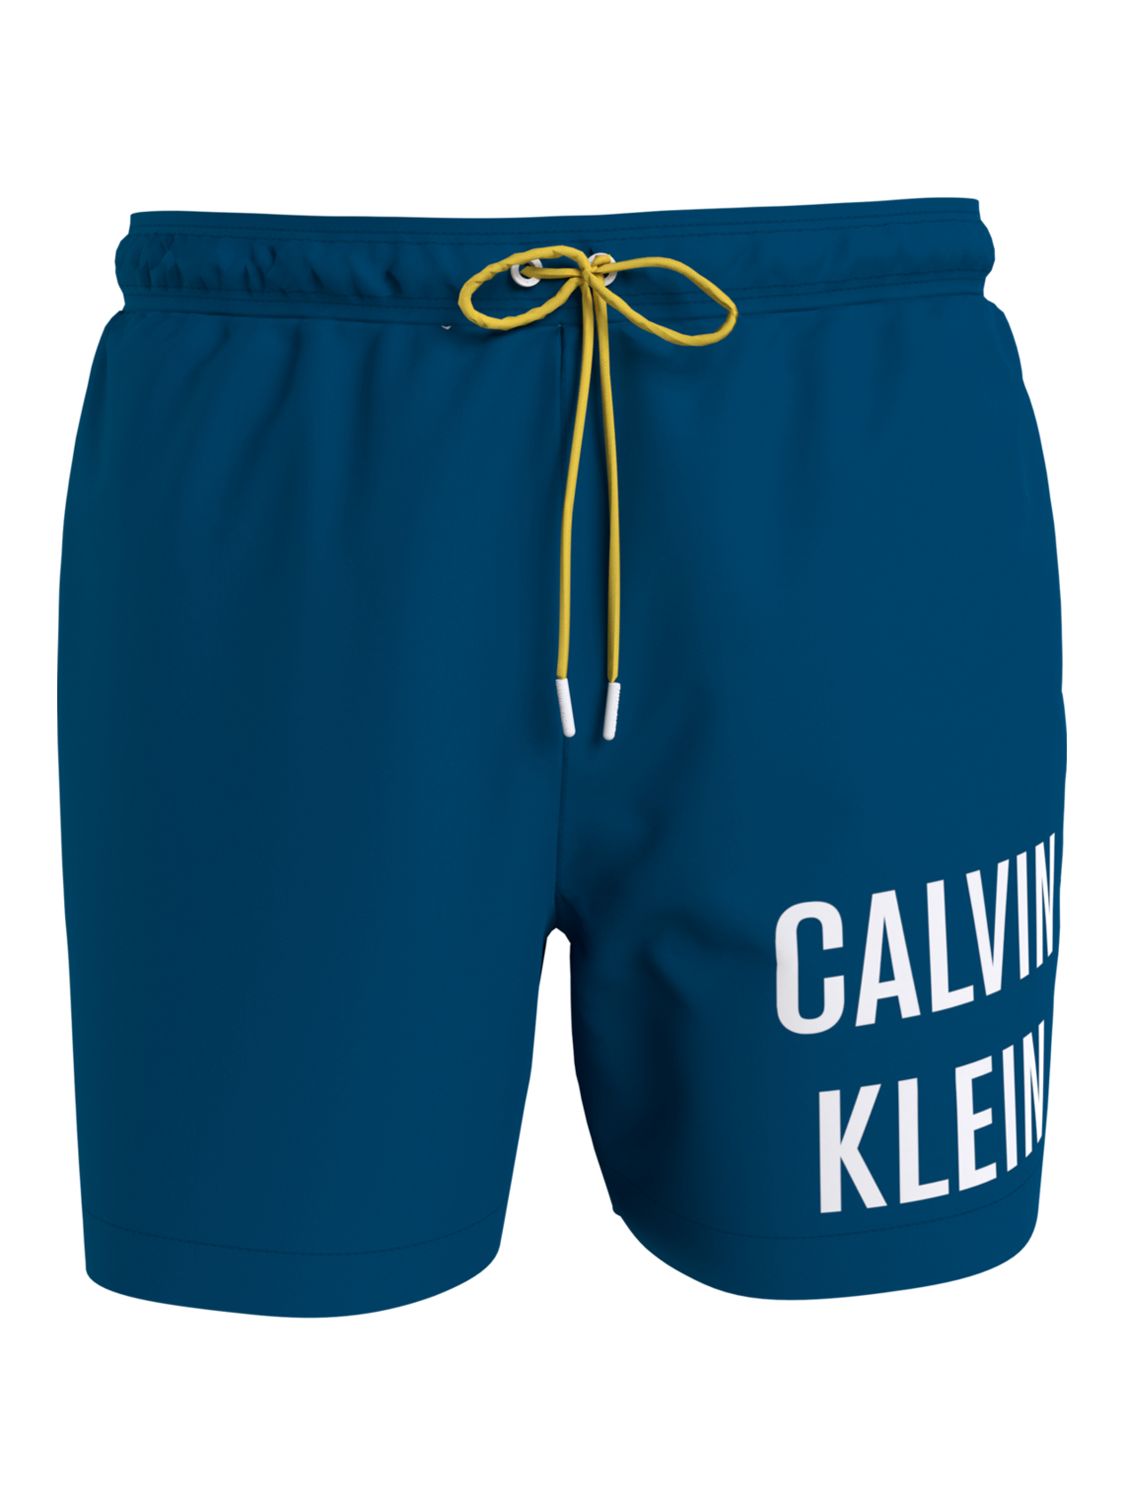 Calvin Klein Logo Recycled Polyester Swim Shorts, Dark Atoll, S